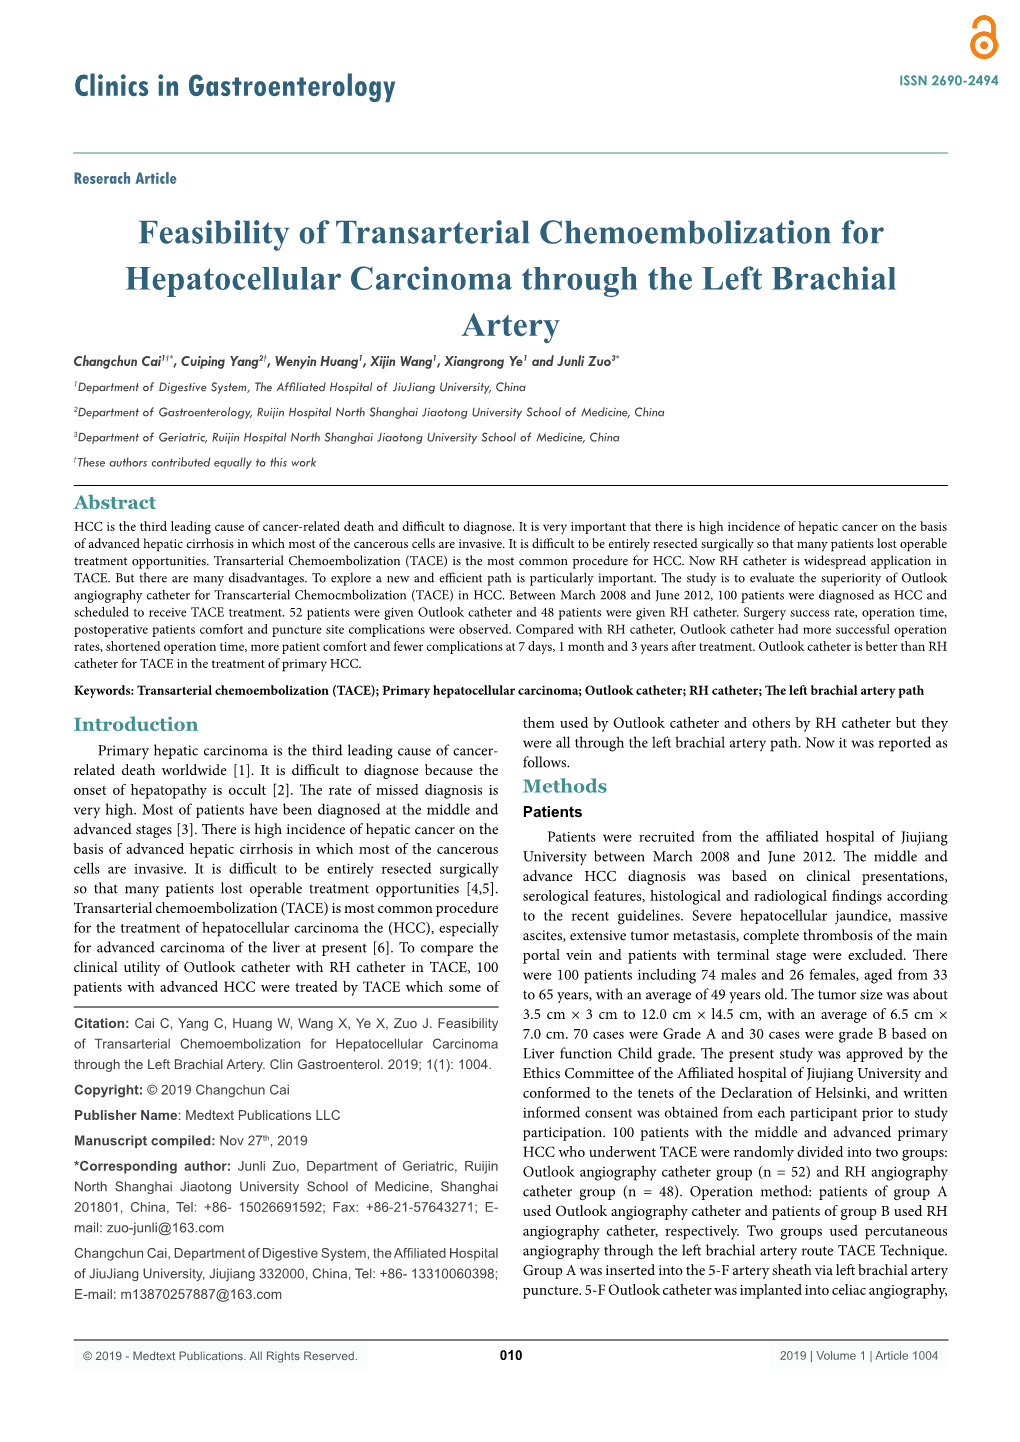 Feasibility of Transarterial Chemoembolization for Hepatocellular Carcinoma Through the Left Brachial Artery